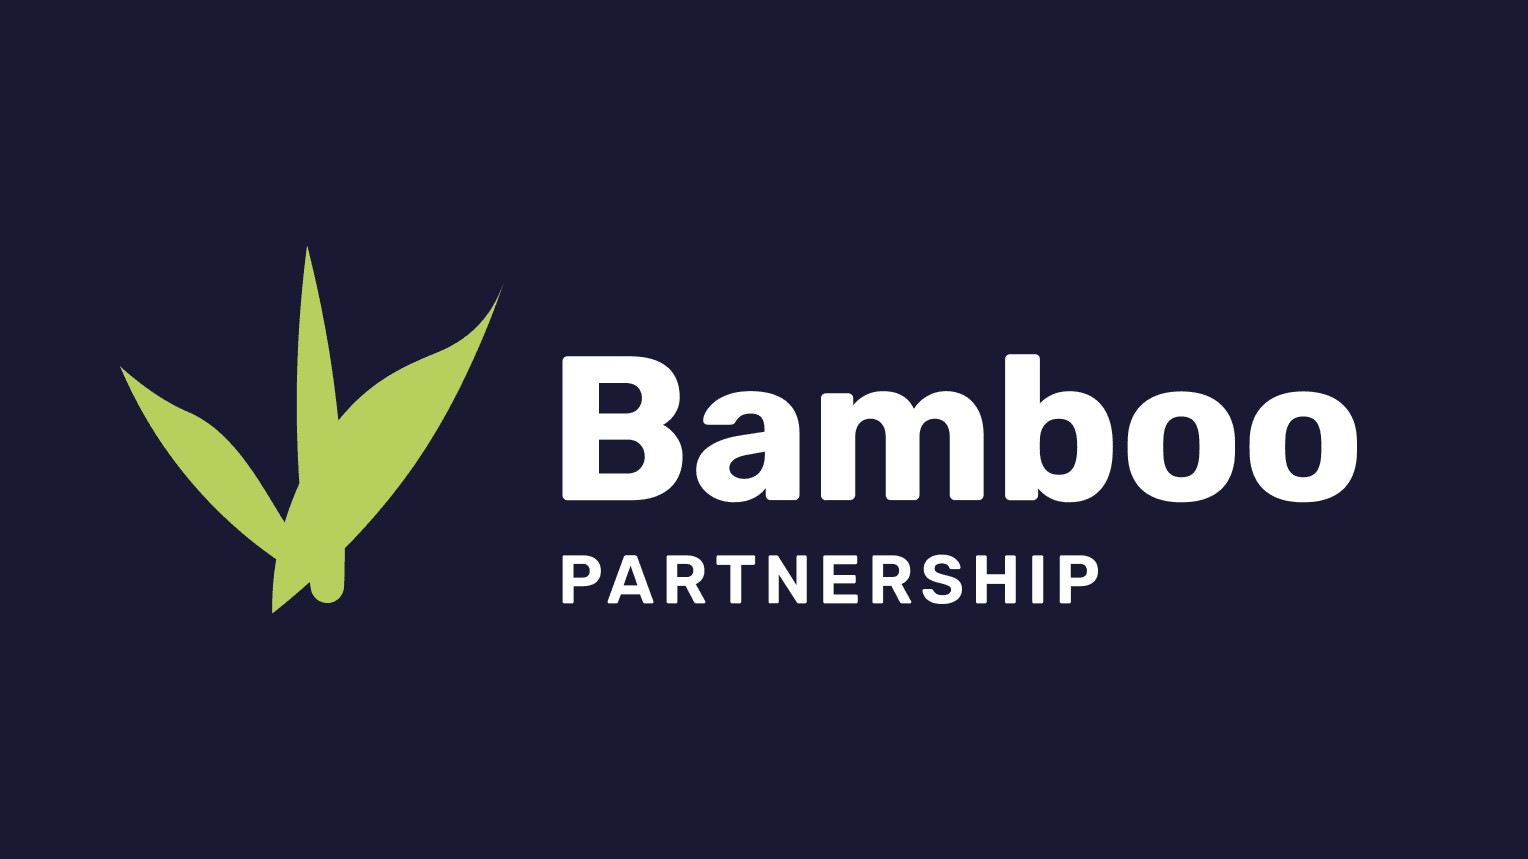 Bamboo Partnership Logo